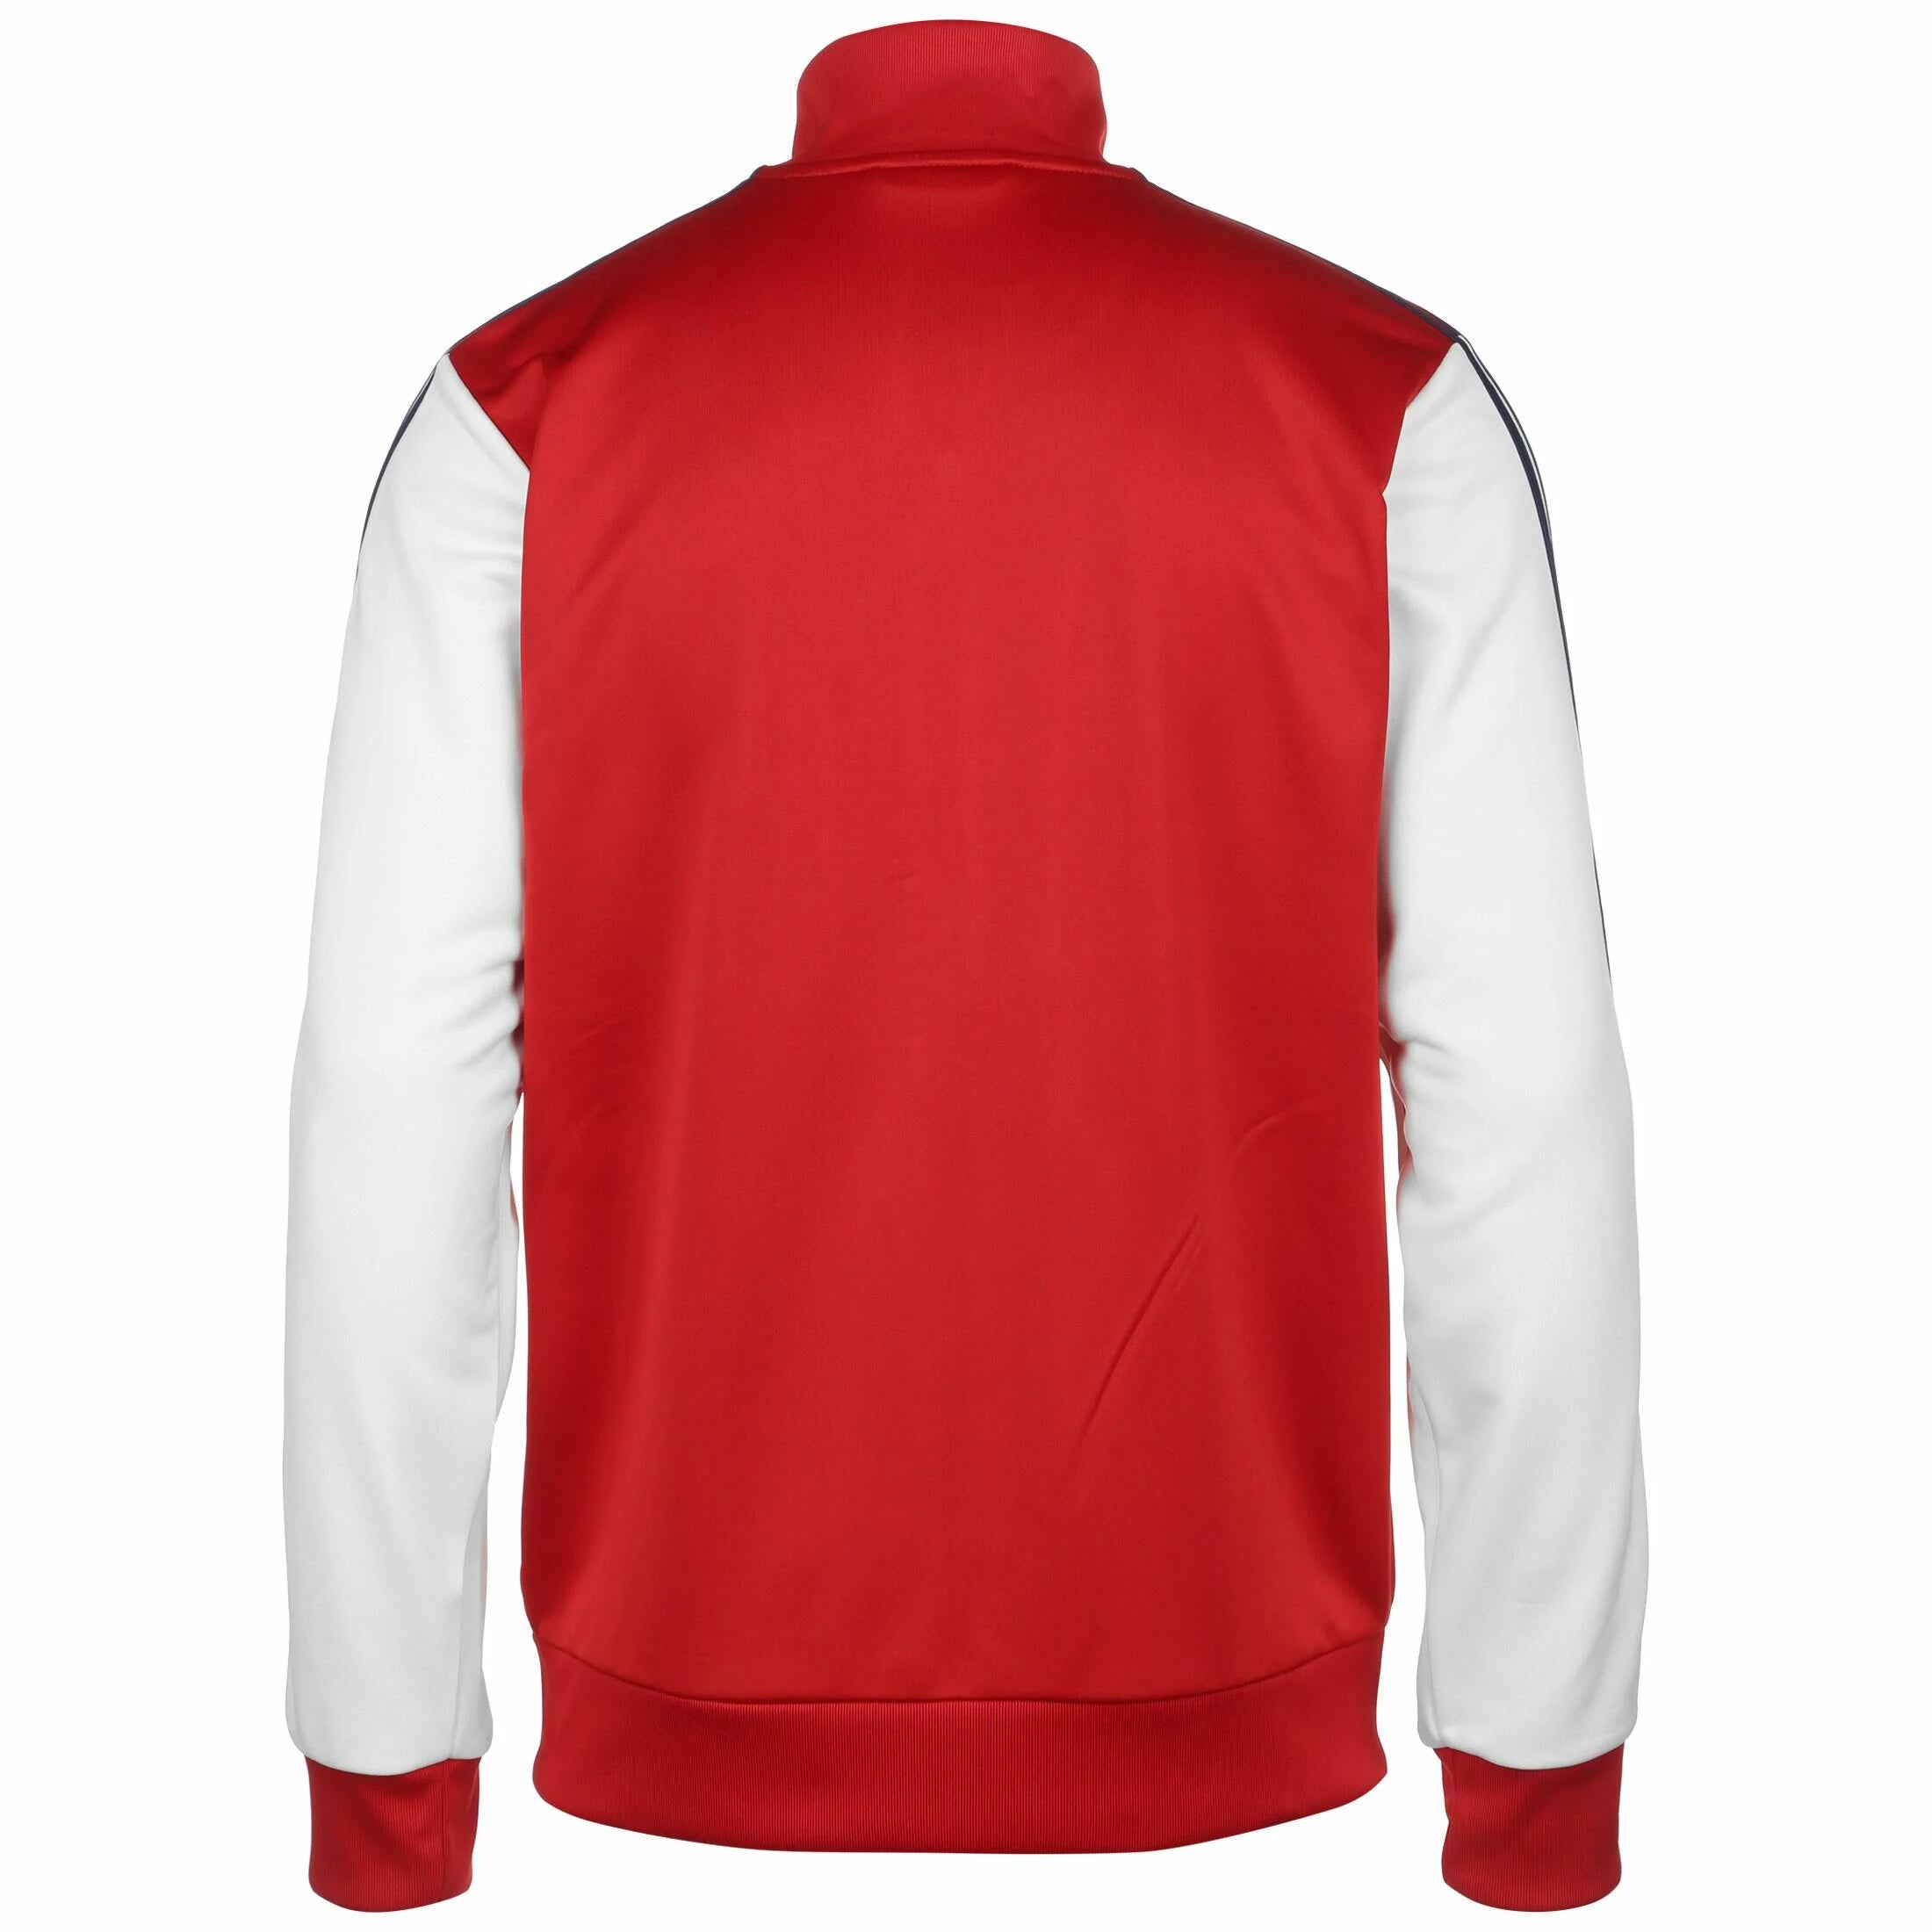 Adidas Men's Arsenal FC 3-Stripes Track Jacket - SCARLET